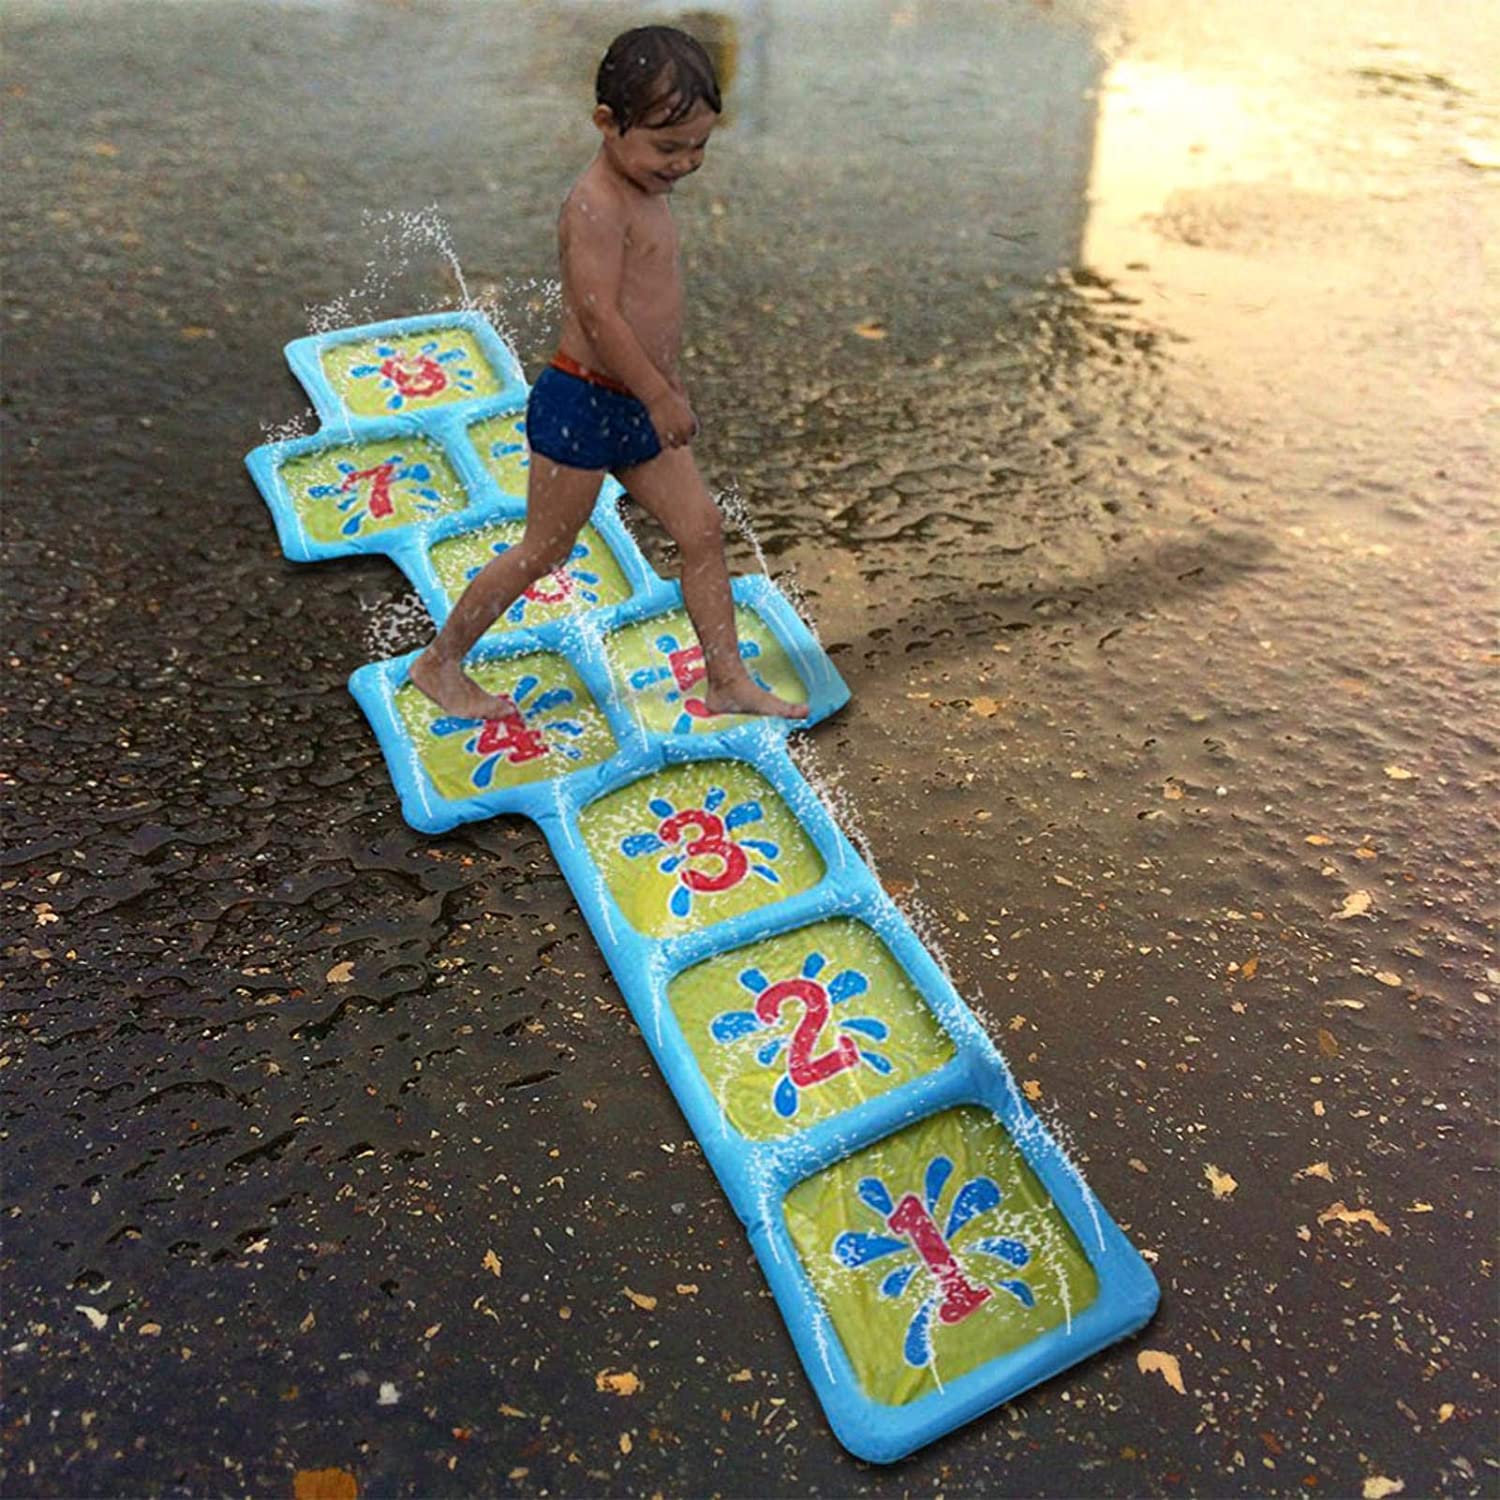 Inflatable Hopscotch Play Mat Sprinkler Water Game for Children Safe And Interestig